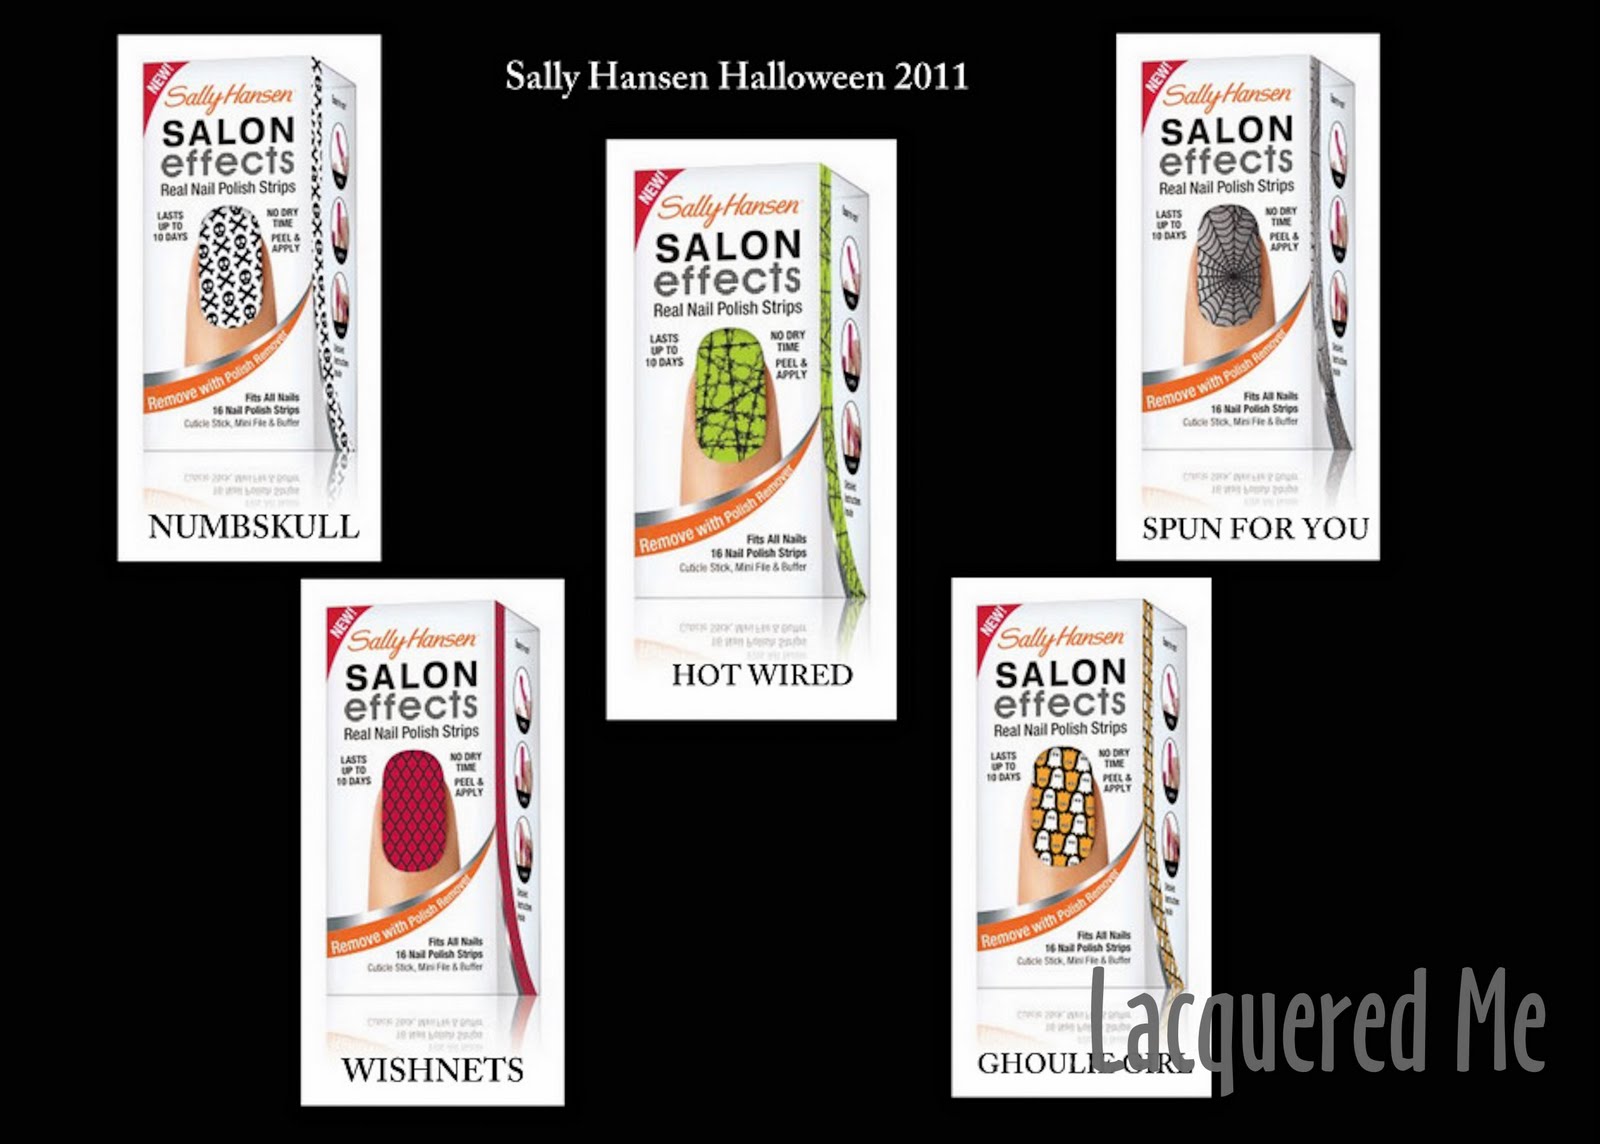 1. Sally Hansen Salon Effects Real Nail Polish Strips - wide 5